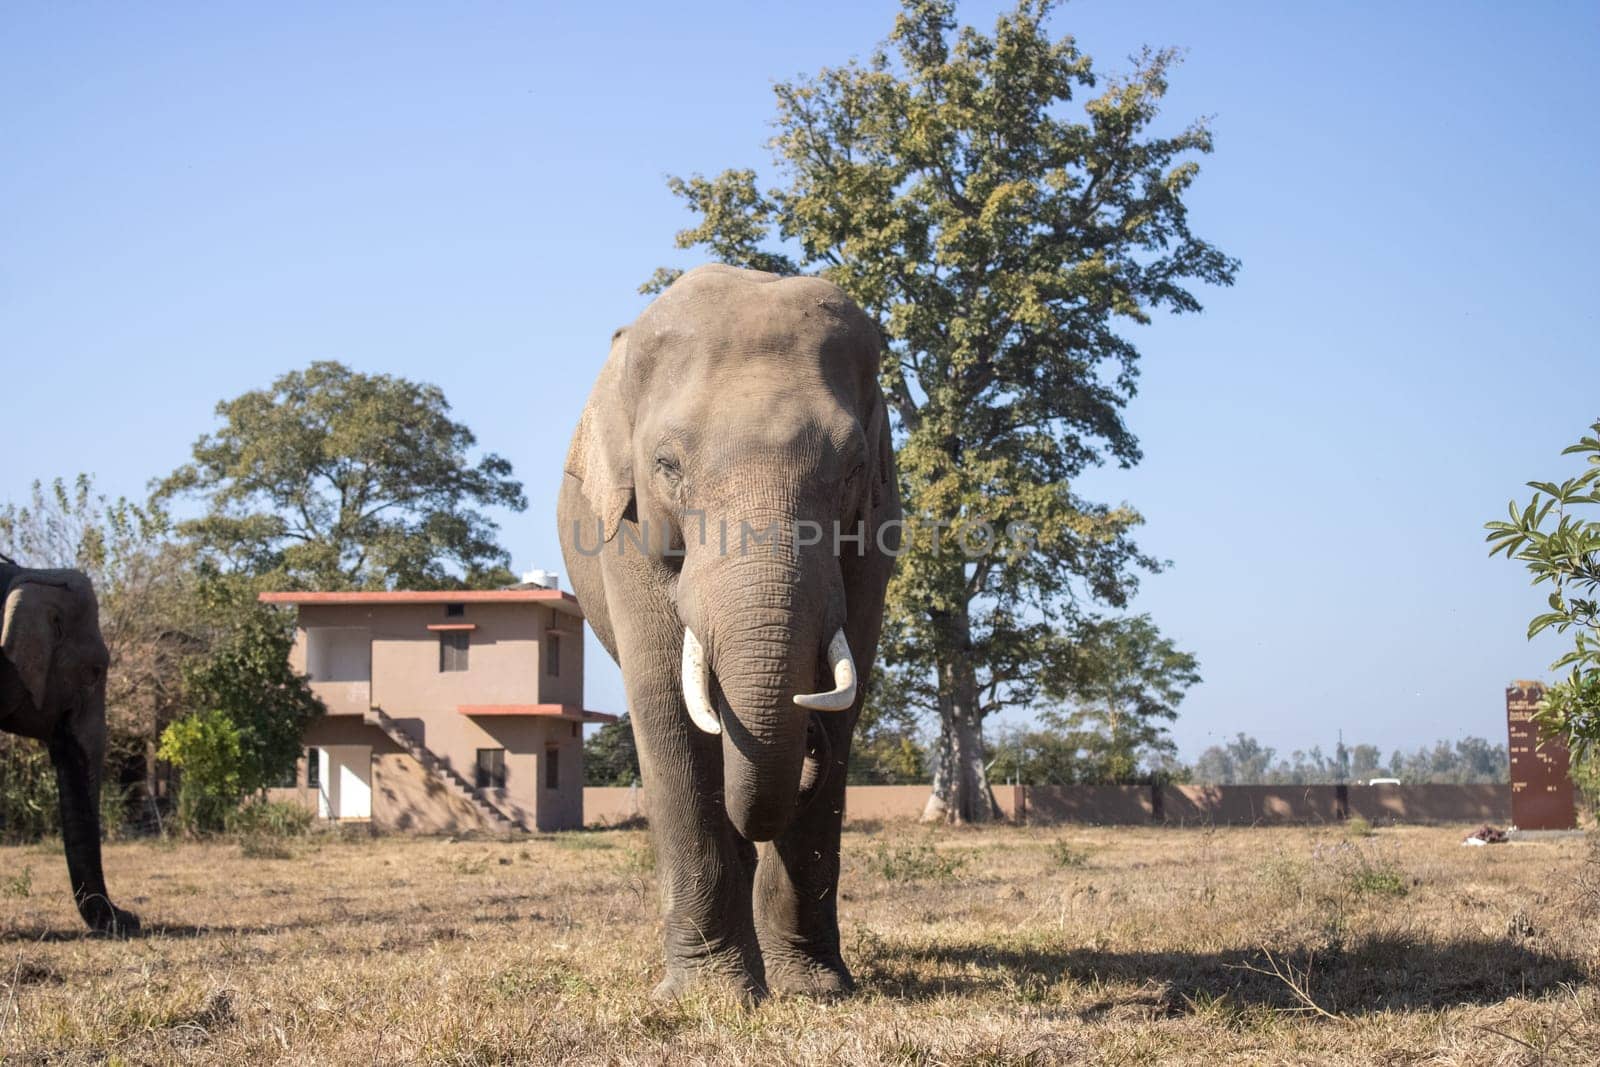 landscapes of Uttarakhand on a beautiful journey with elephants.High quality image